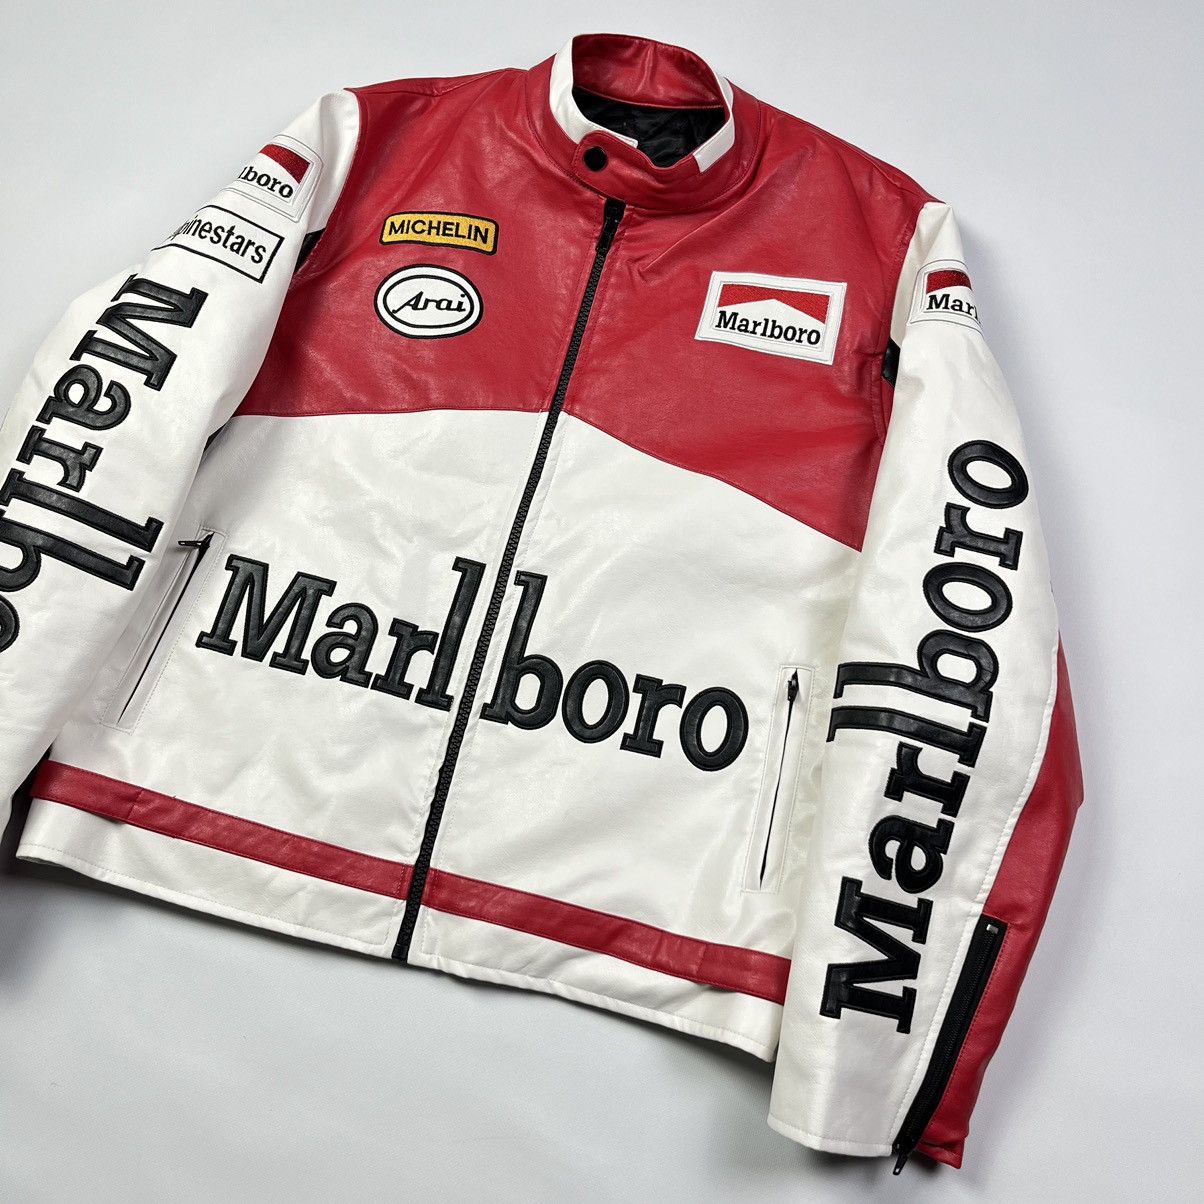 Marlboro Malboro Moto Jacket Leather Michlein | Grailed